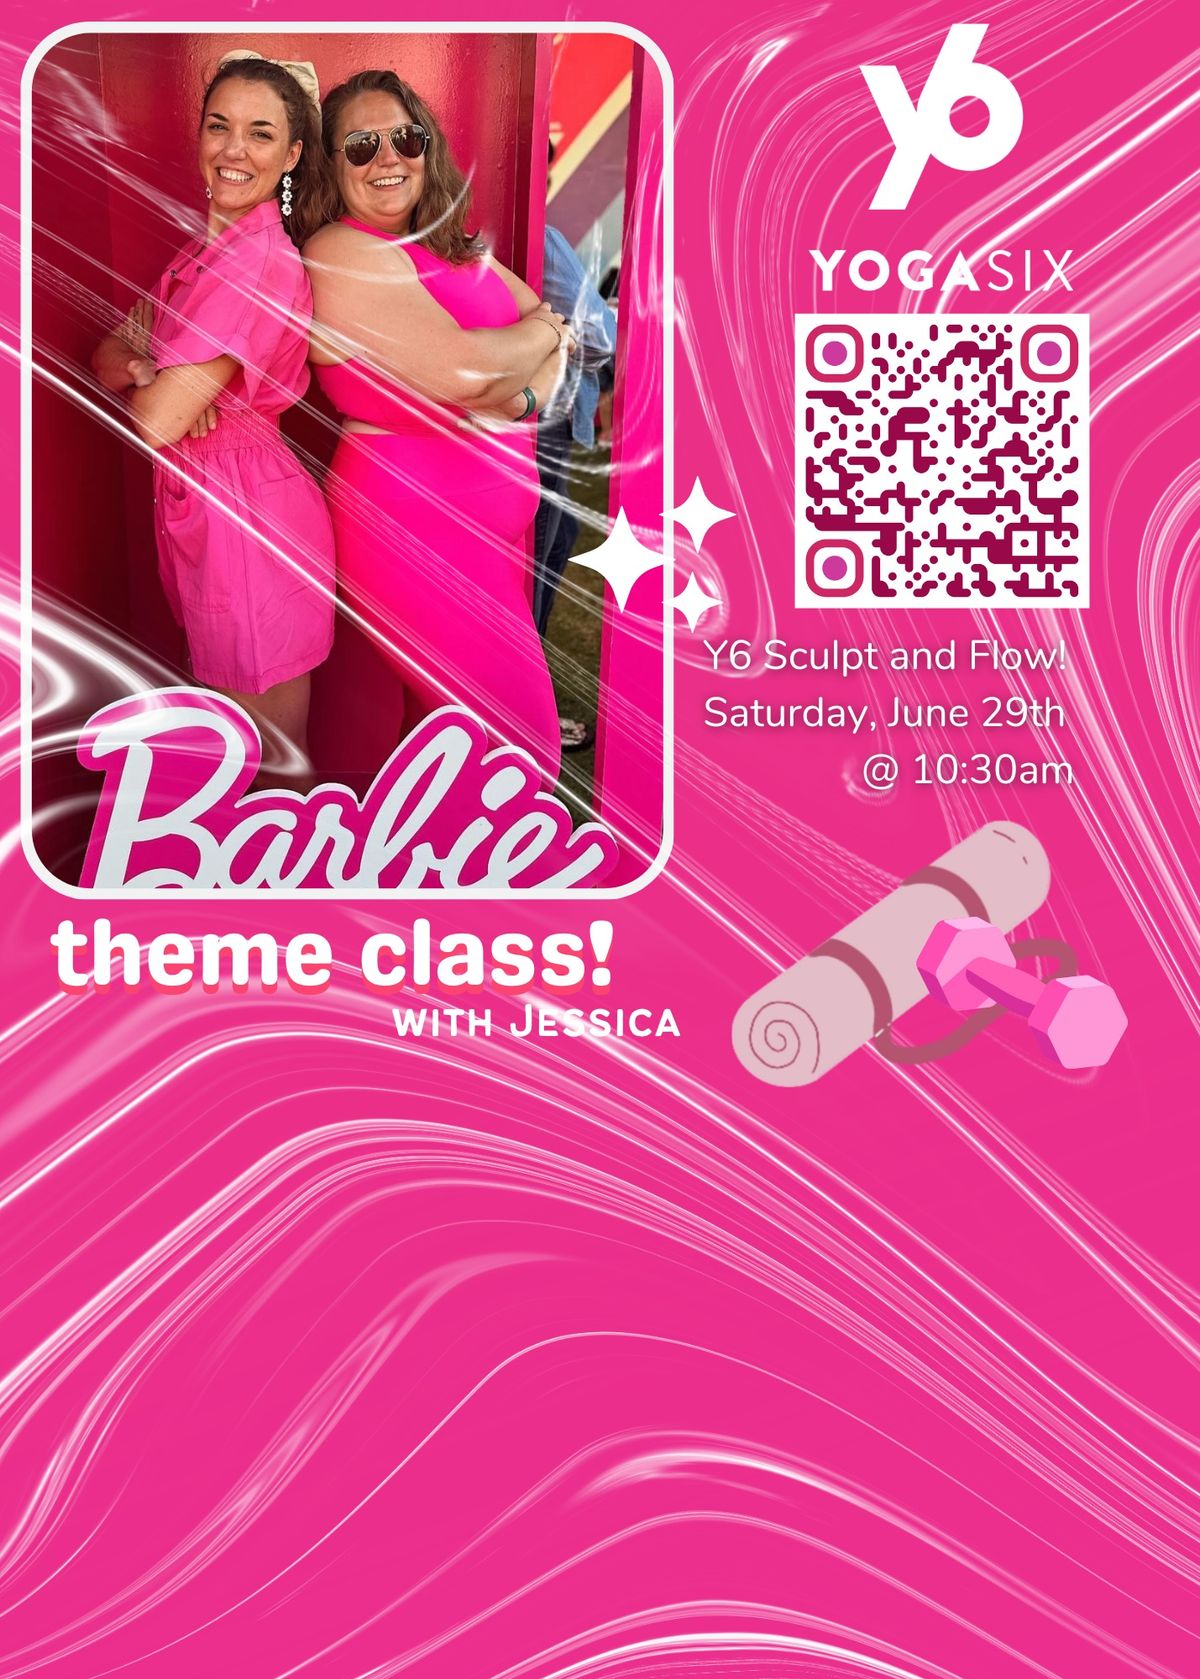 Free Barbie Themed Yoga Class